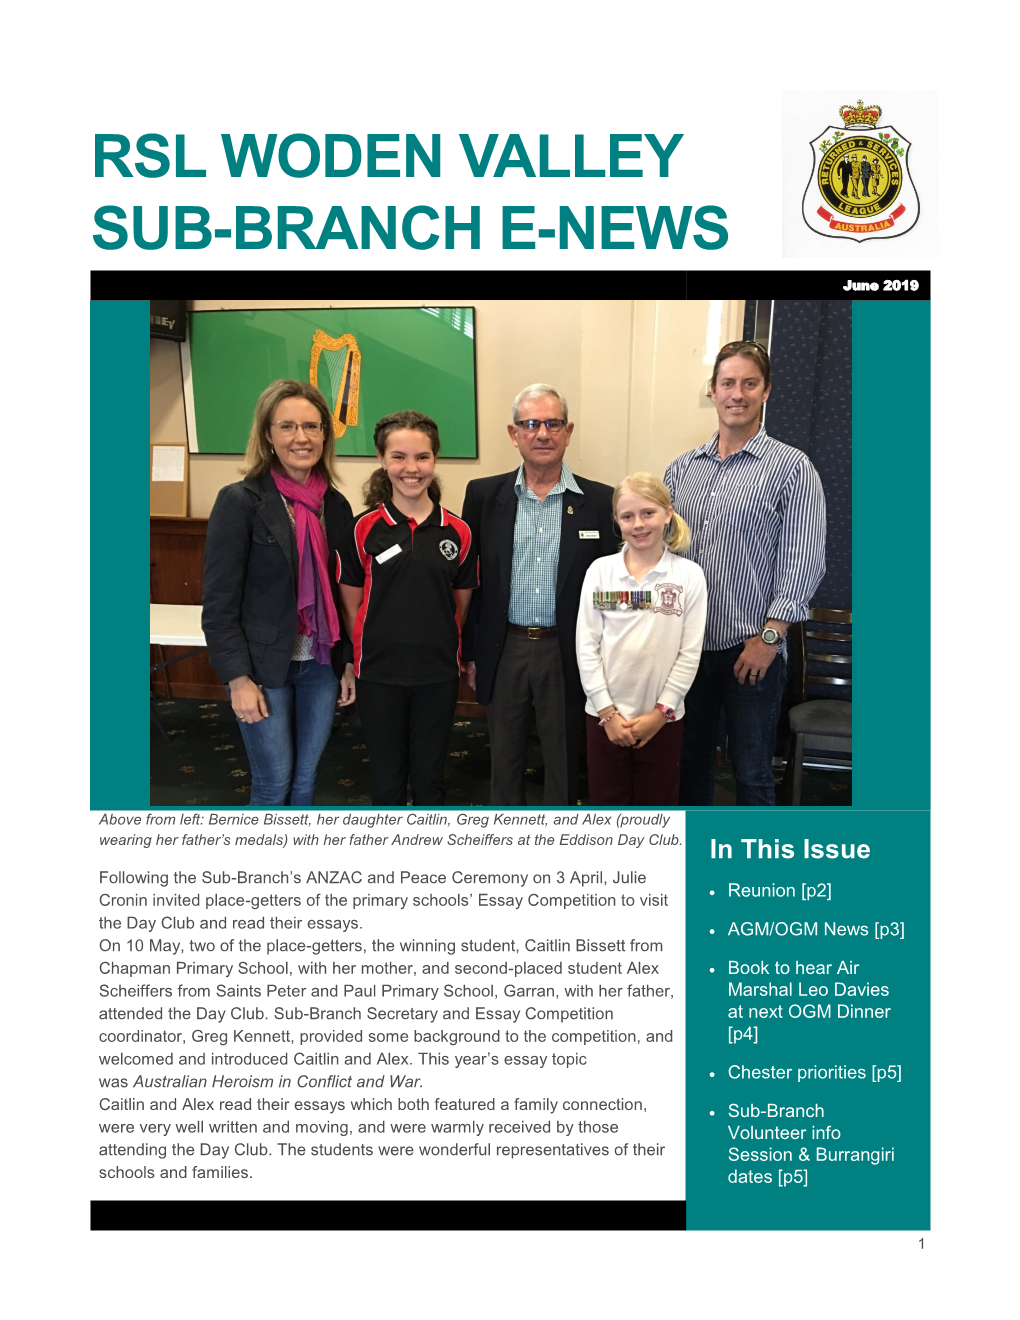 Rsl Woden Valley Sub-Branch E-News